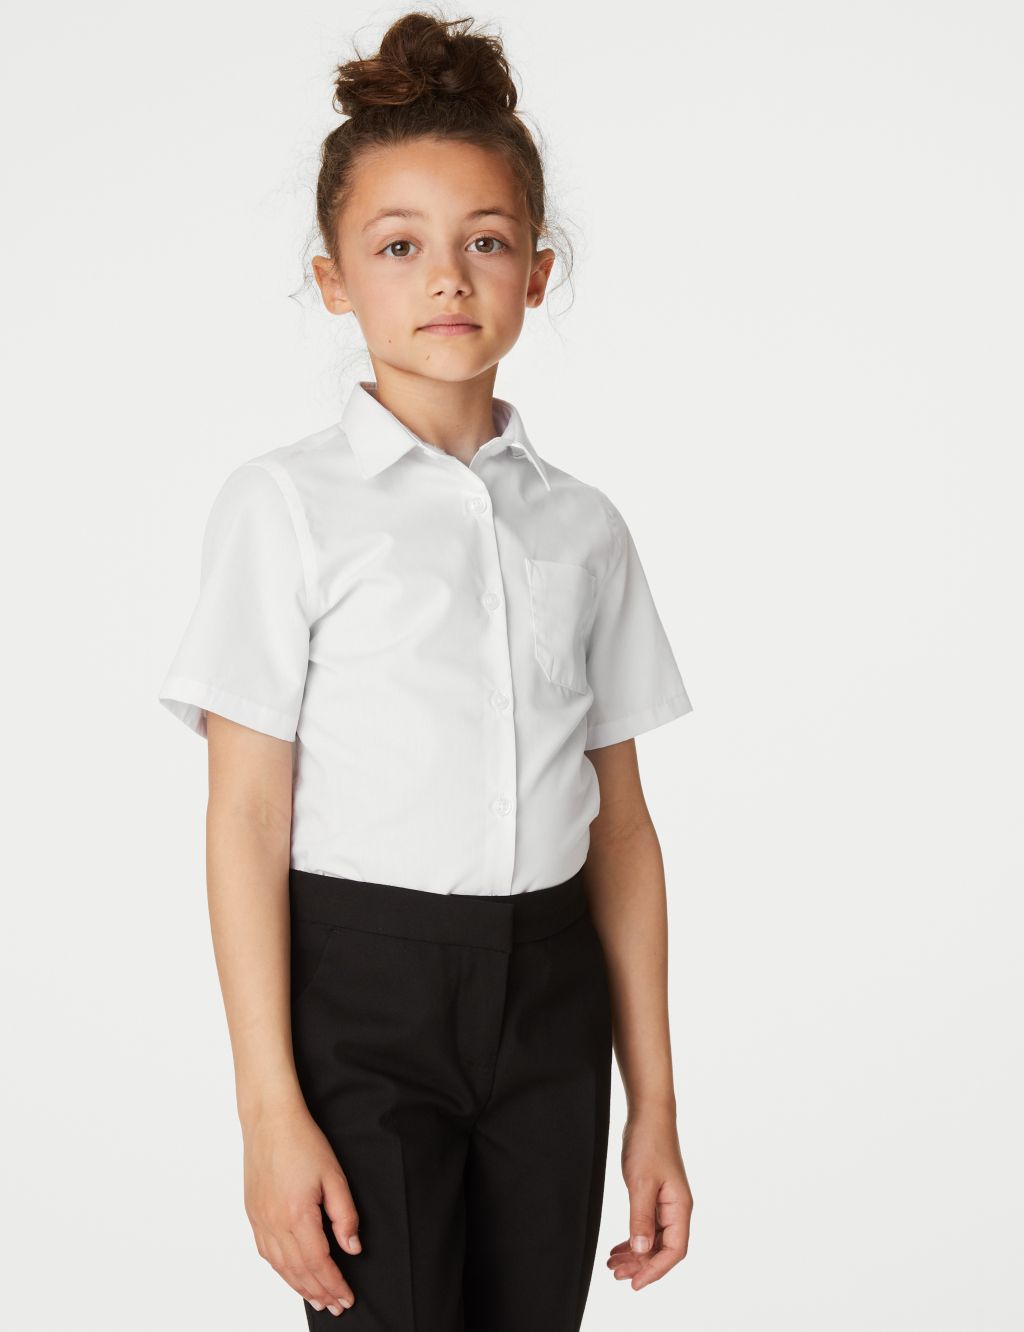 2pk Girls' Slim Fit Non-Iron School Shirts (2-18 Yrs) image 2